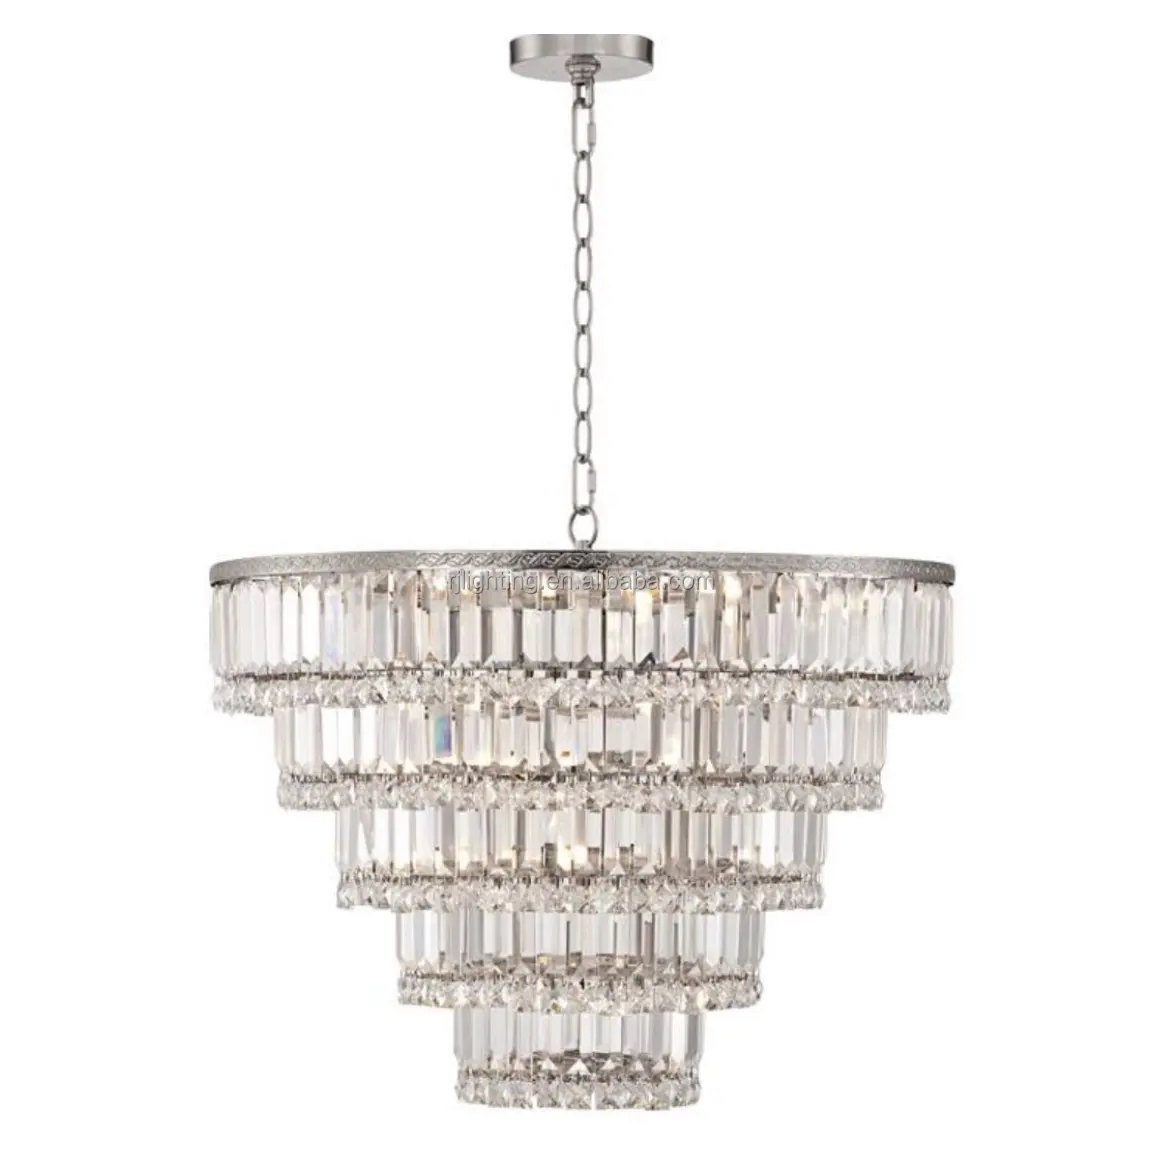 Lampes d'intérieur moderne plafond rond led suspension luxe argent nickel lustre en cristal